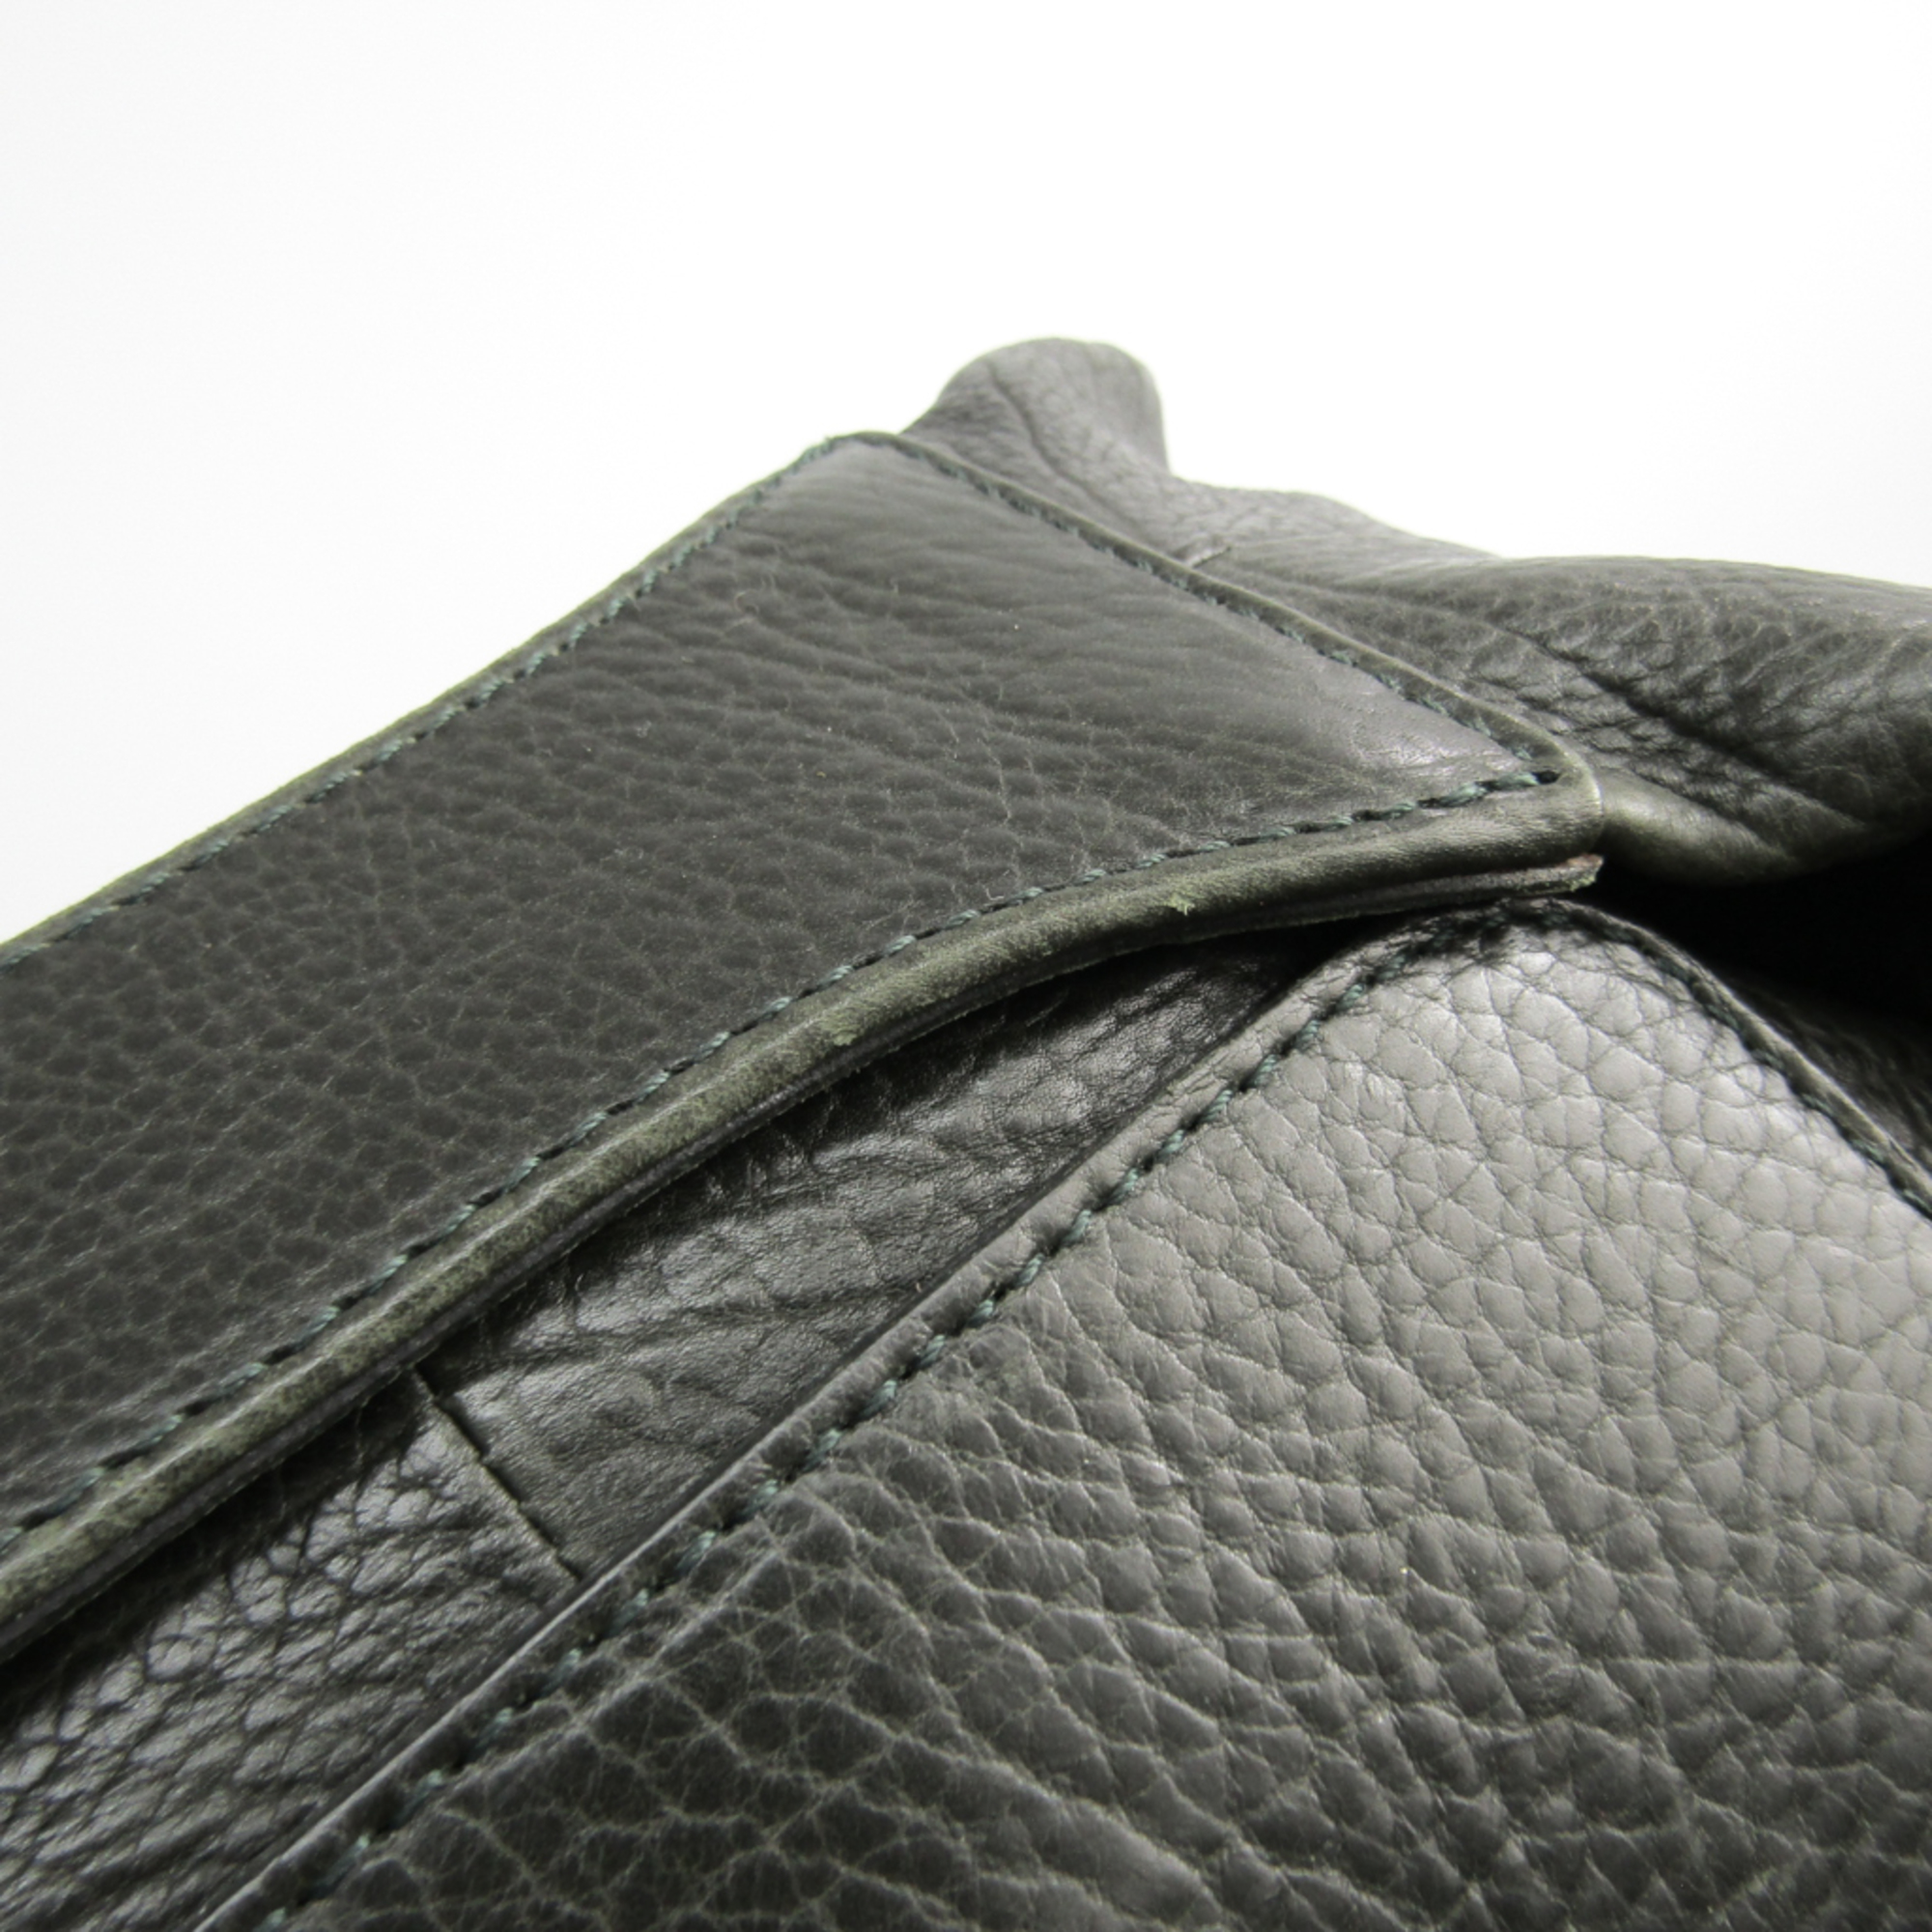 Bottega Veneta Men's Leather Boston Bag Khaki